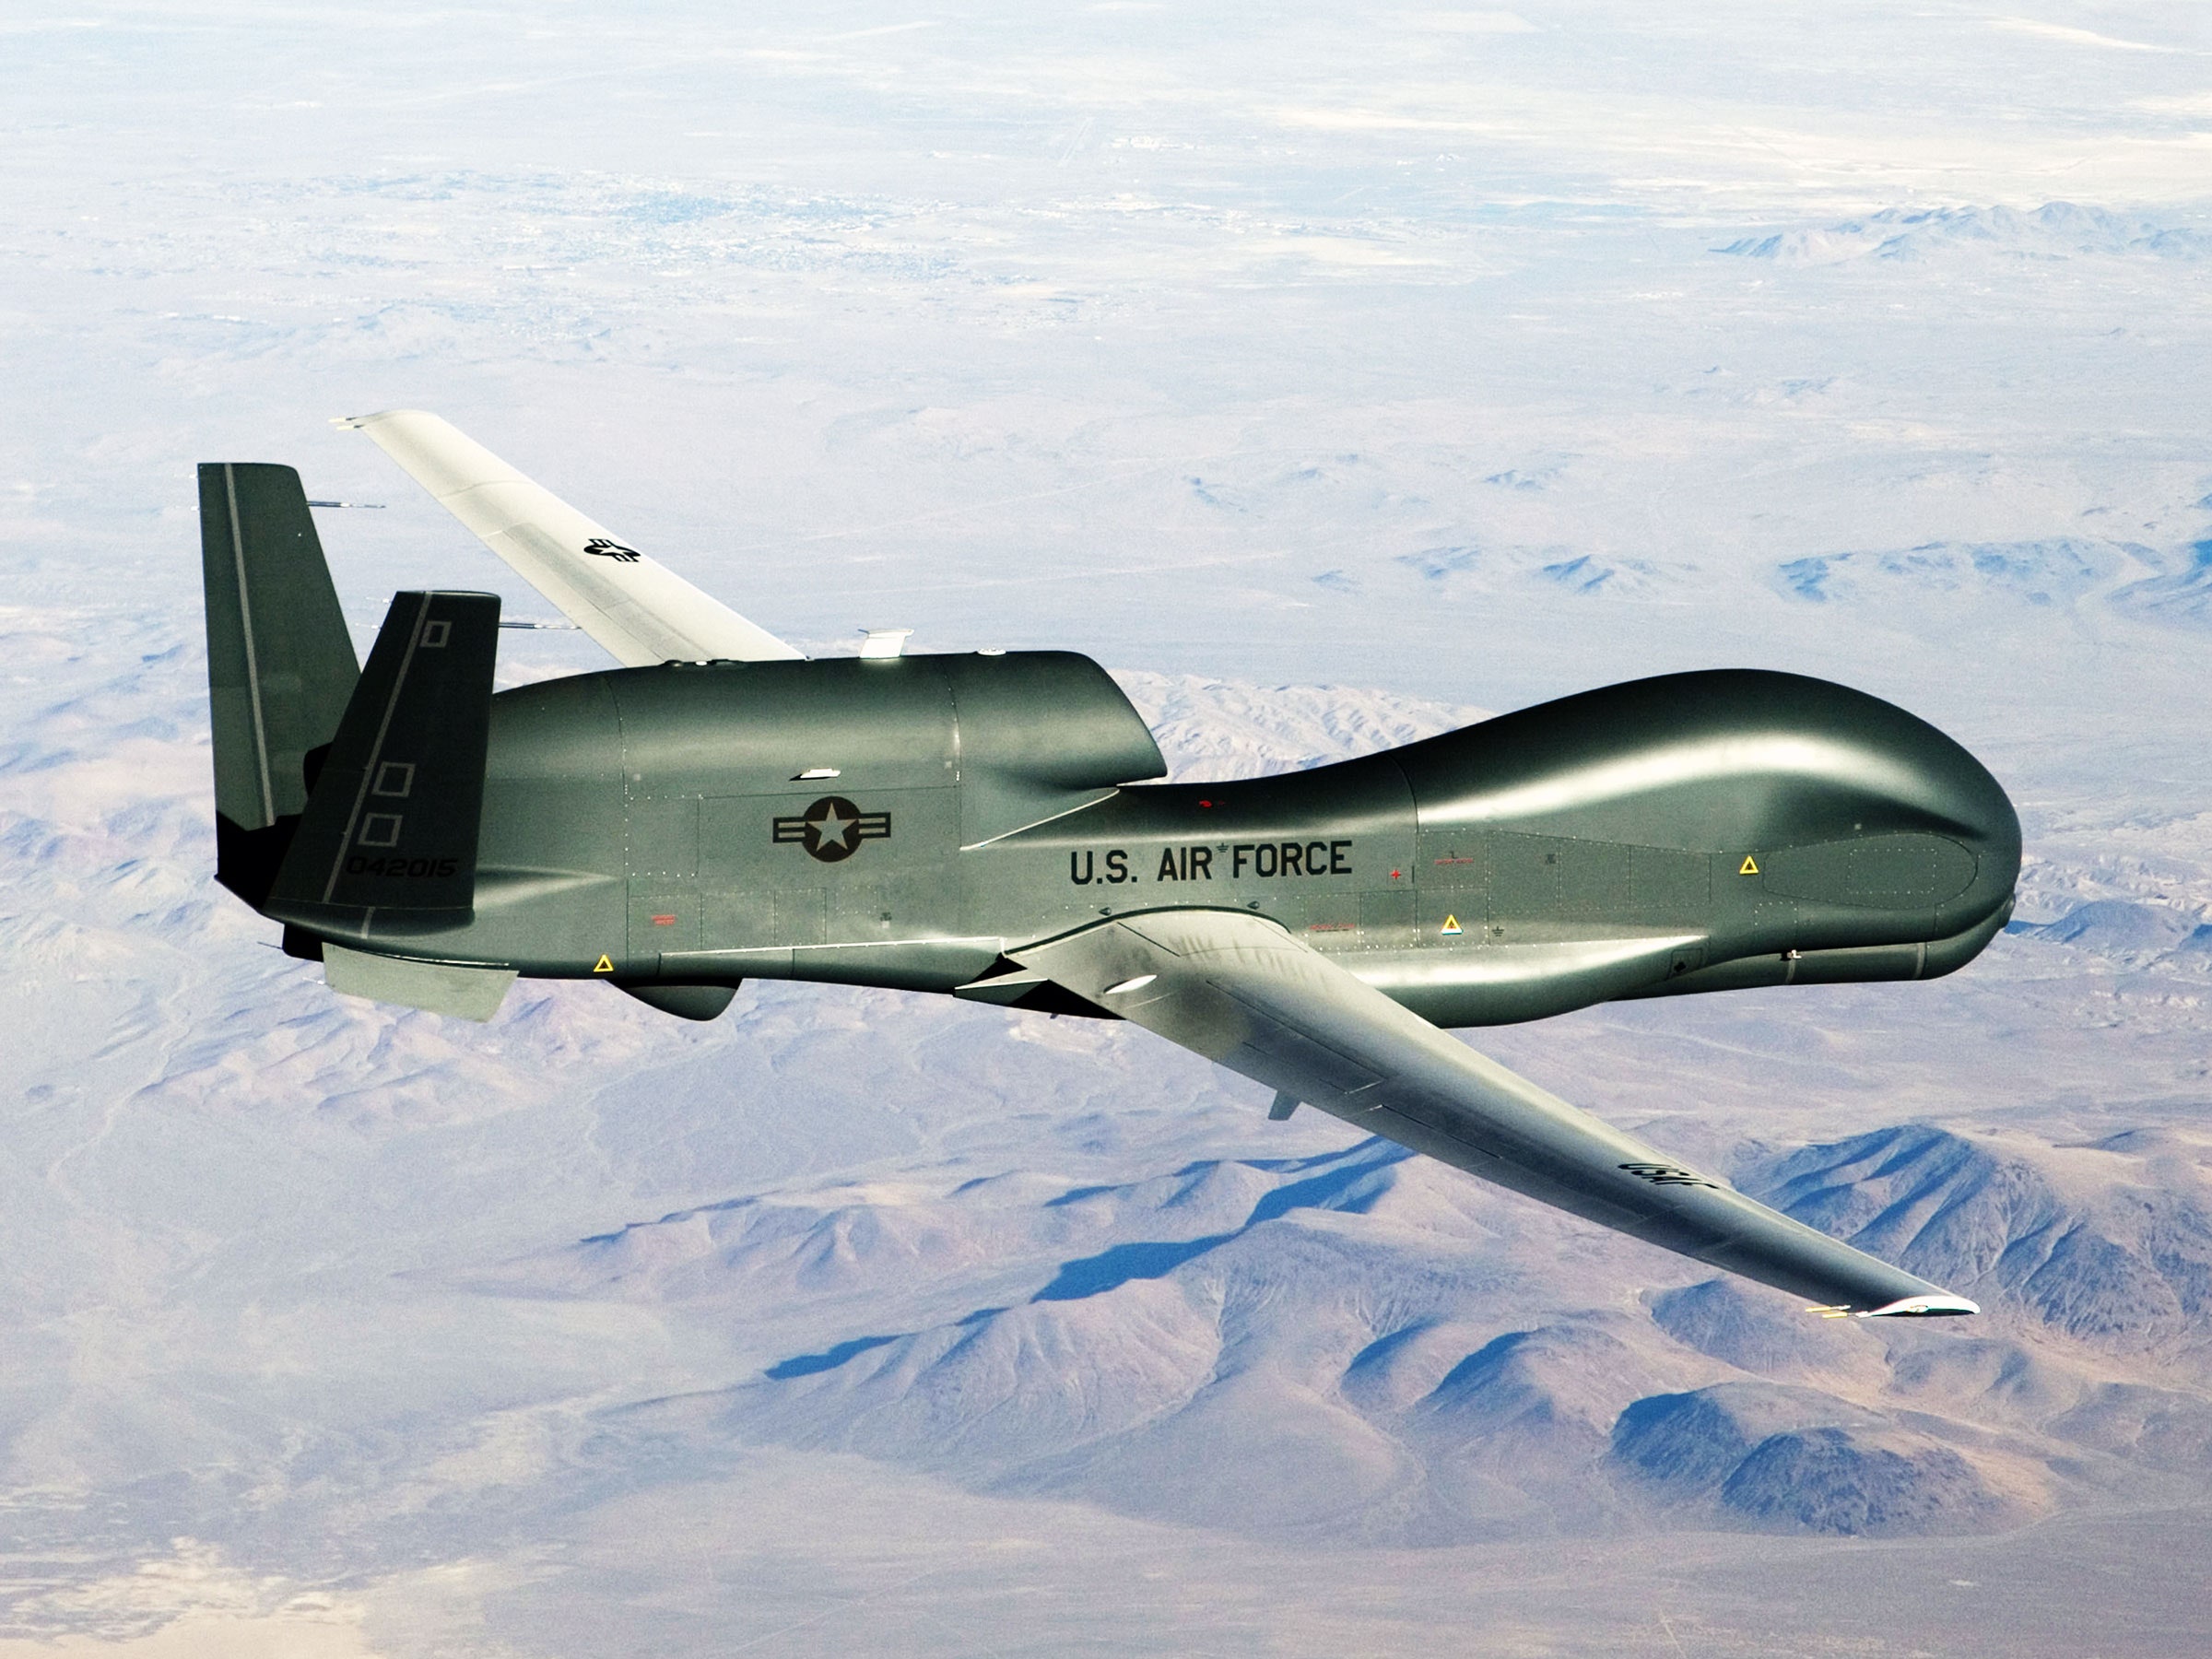 The Global Hawk Drone Iran Shot Down Was a $220M Surveillance Monster